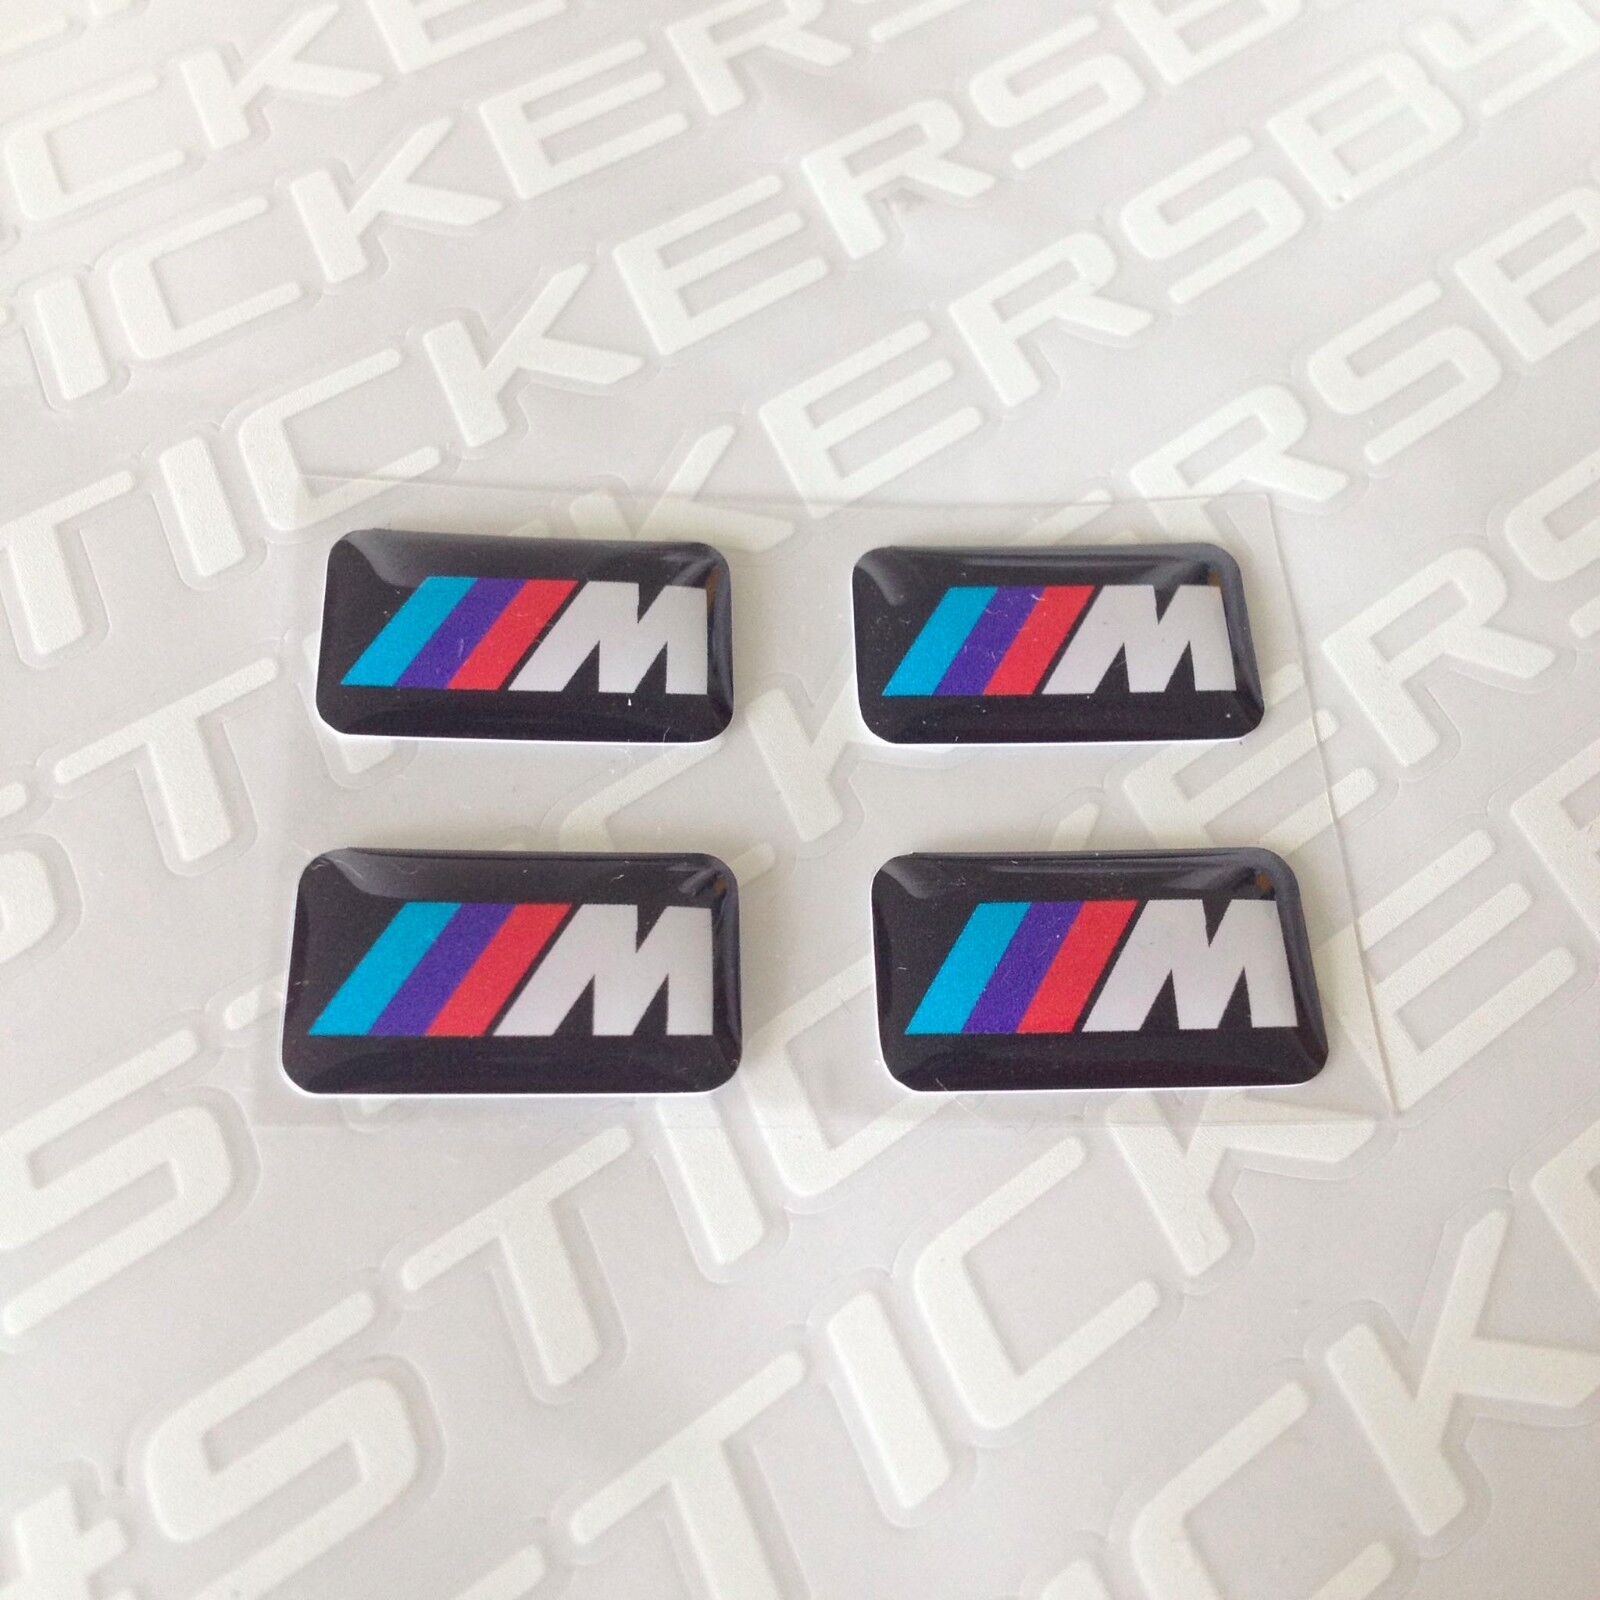 4x BMW M 3D sticker set rims wheels badge emblem